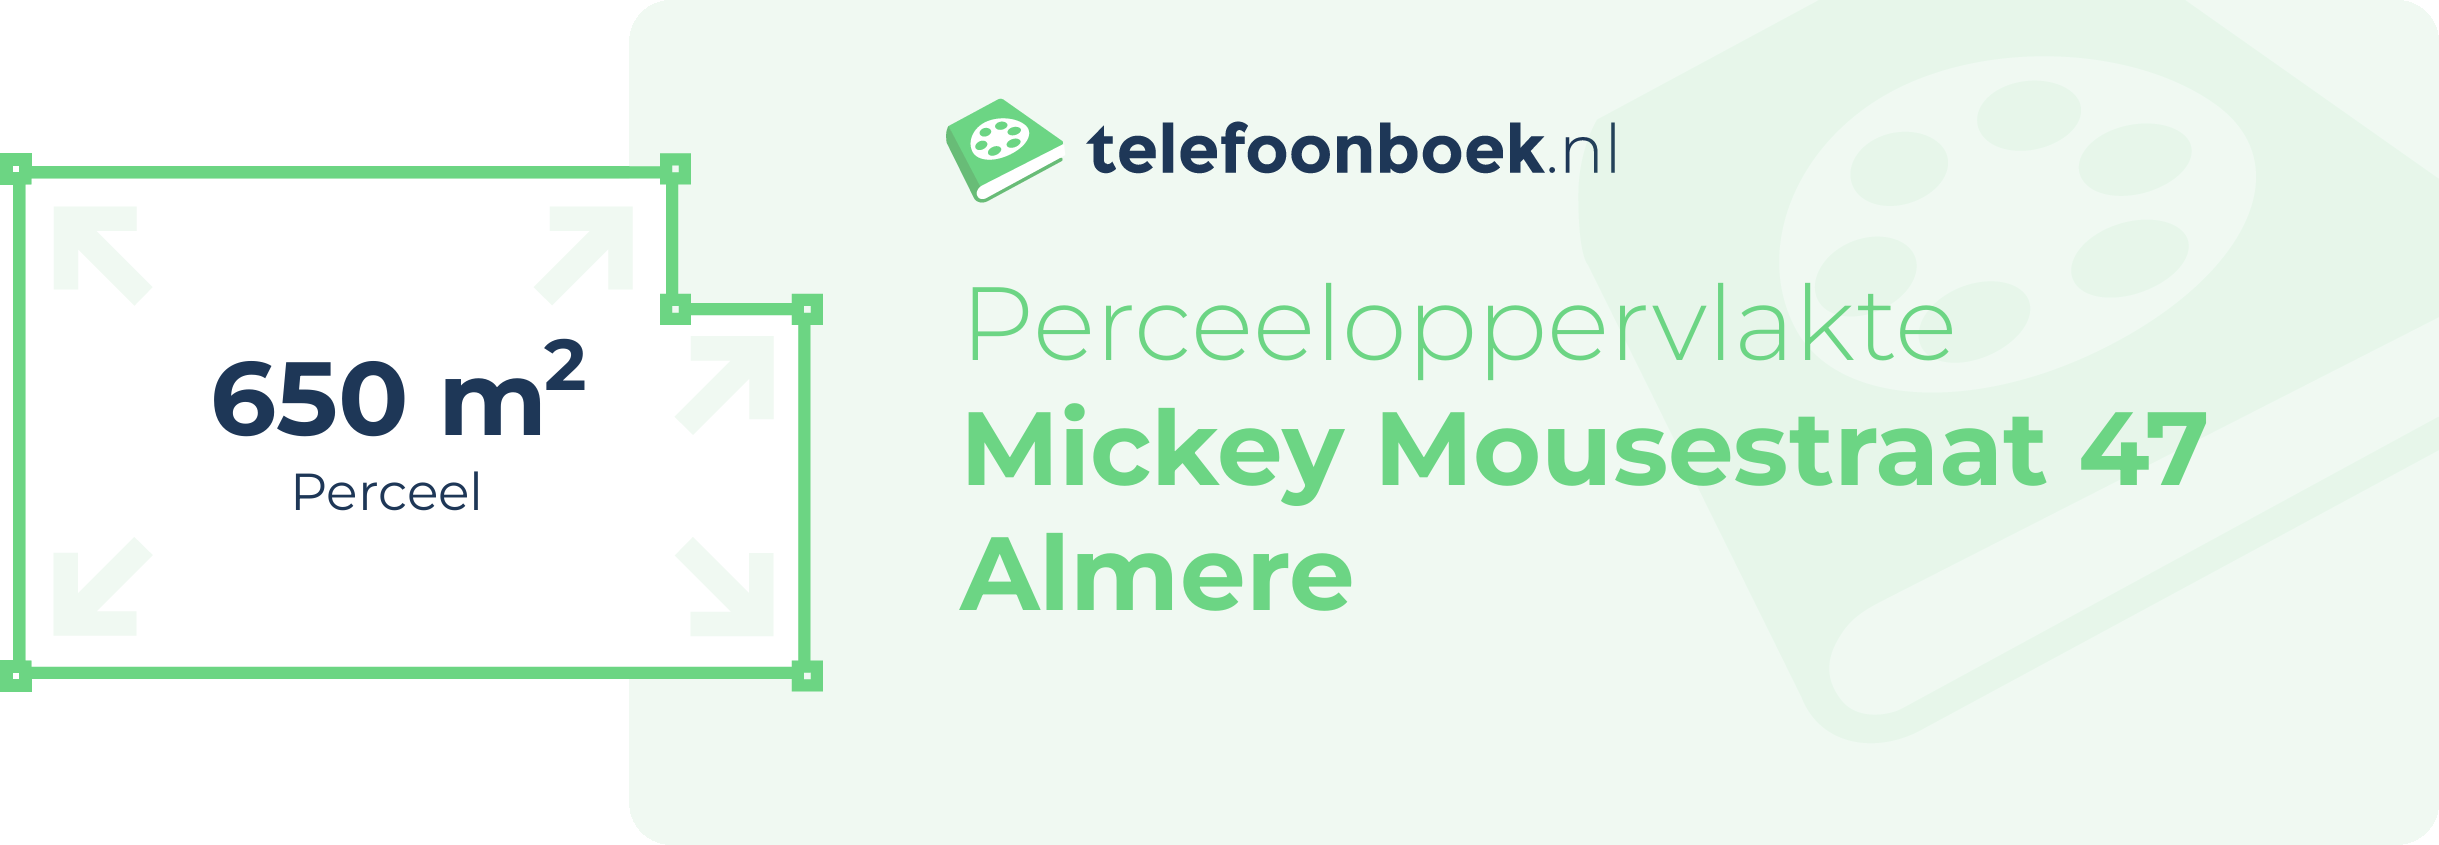 Perceeloppervlakte Mickey Mousestraat 47 Almere